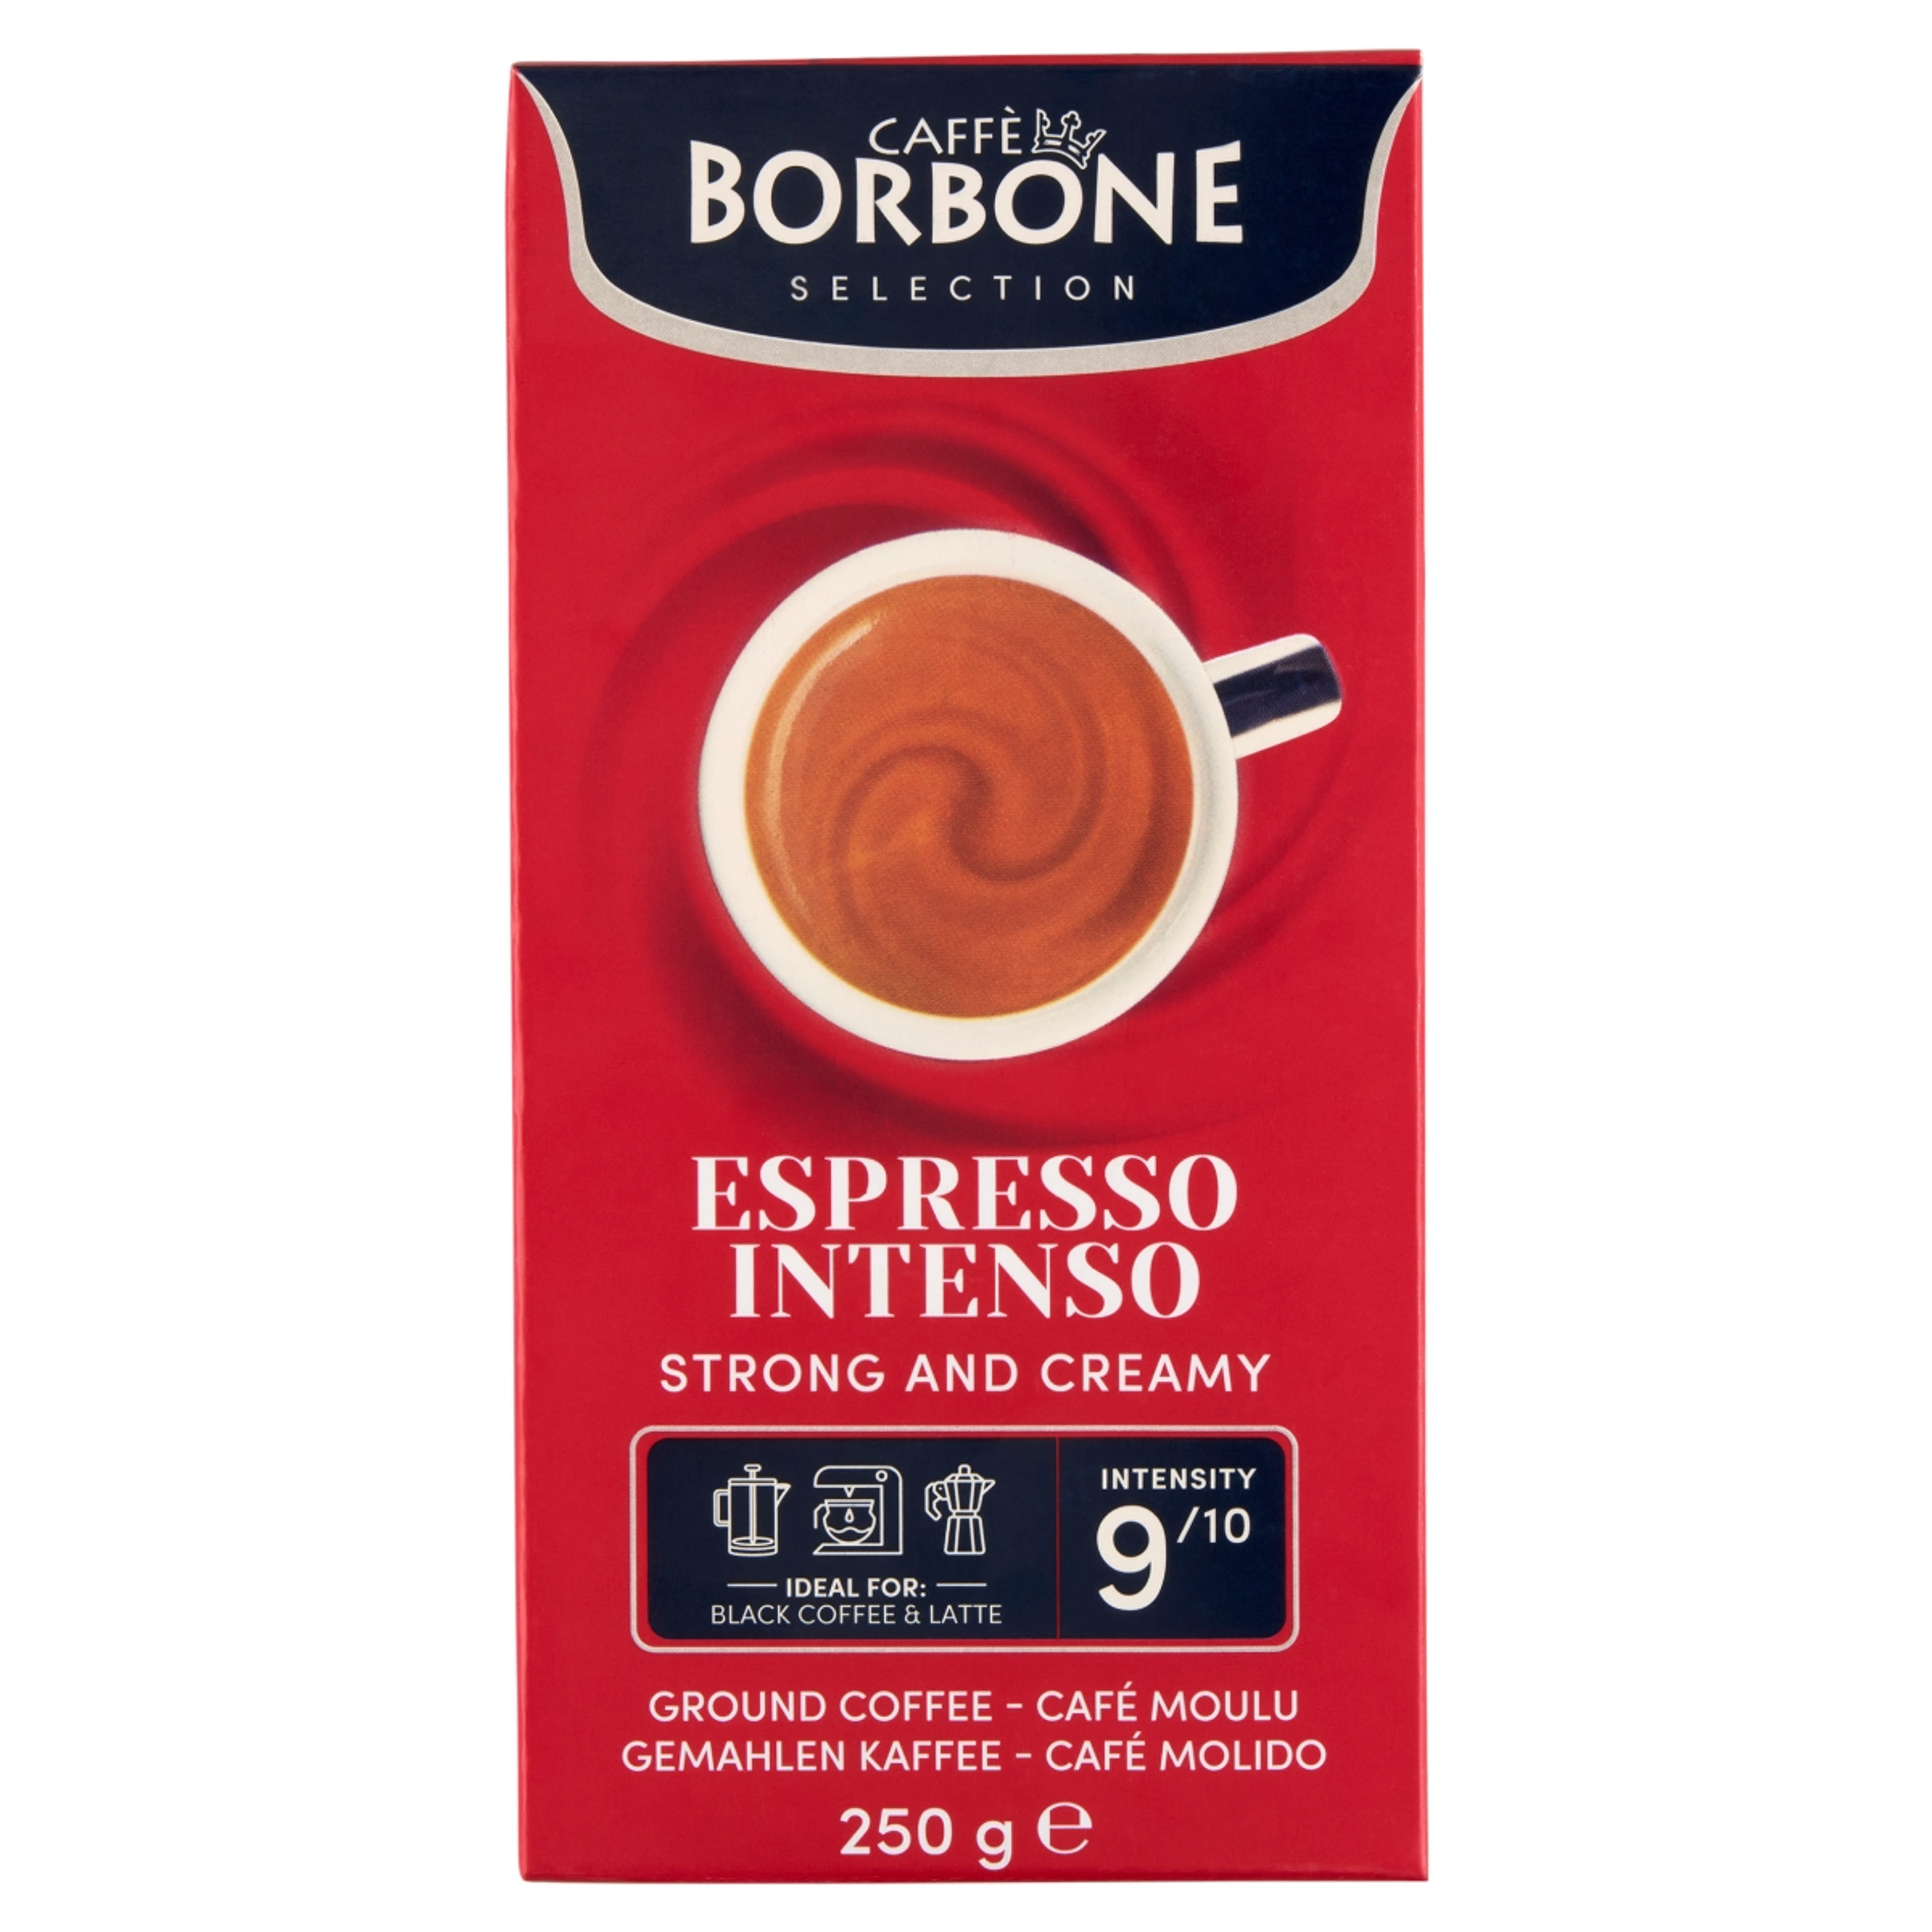 Caffè Borbone Espresso Intenso őrölt kávé - 250 g-1